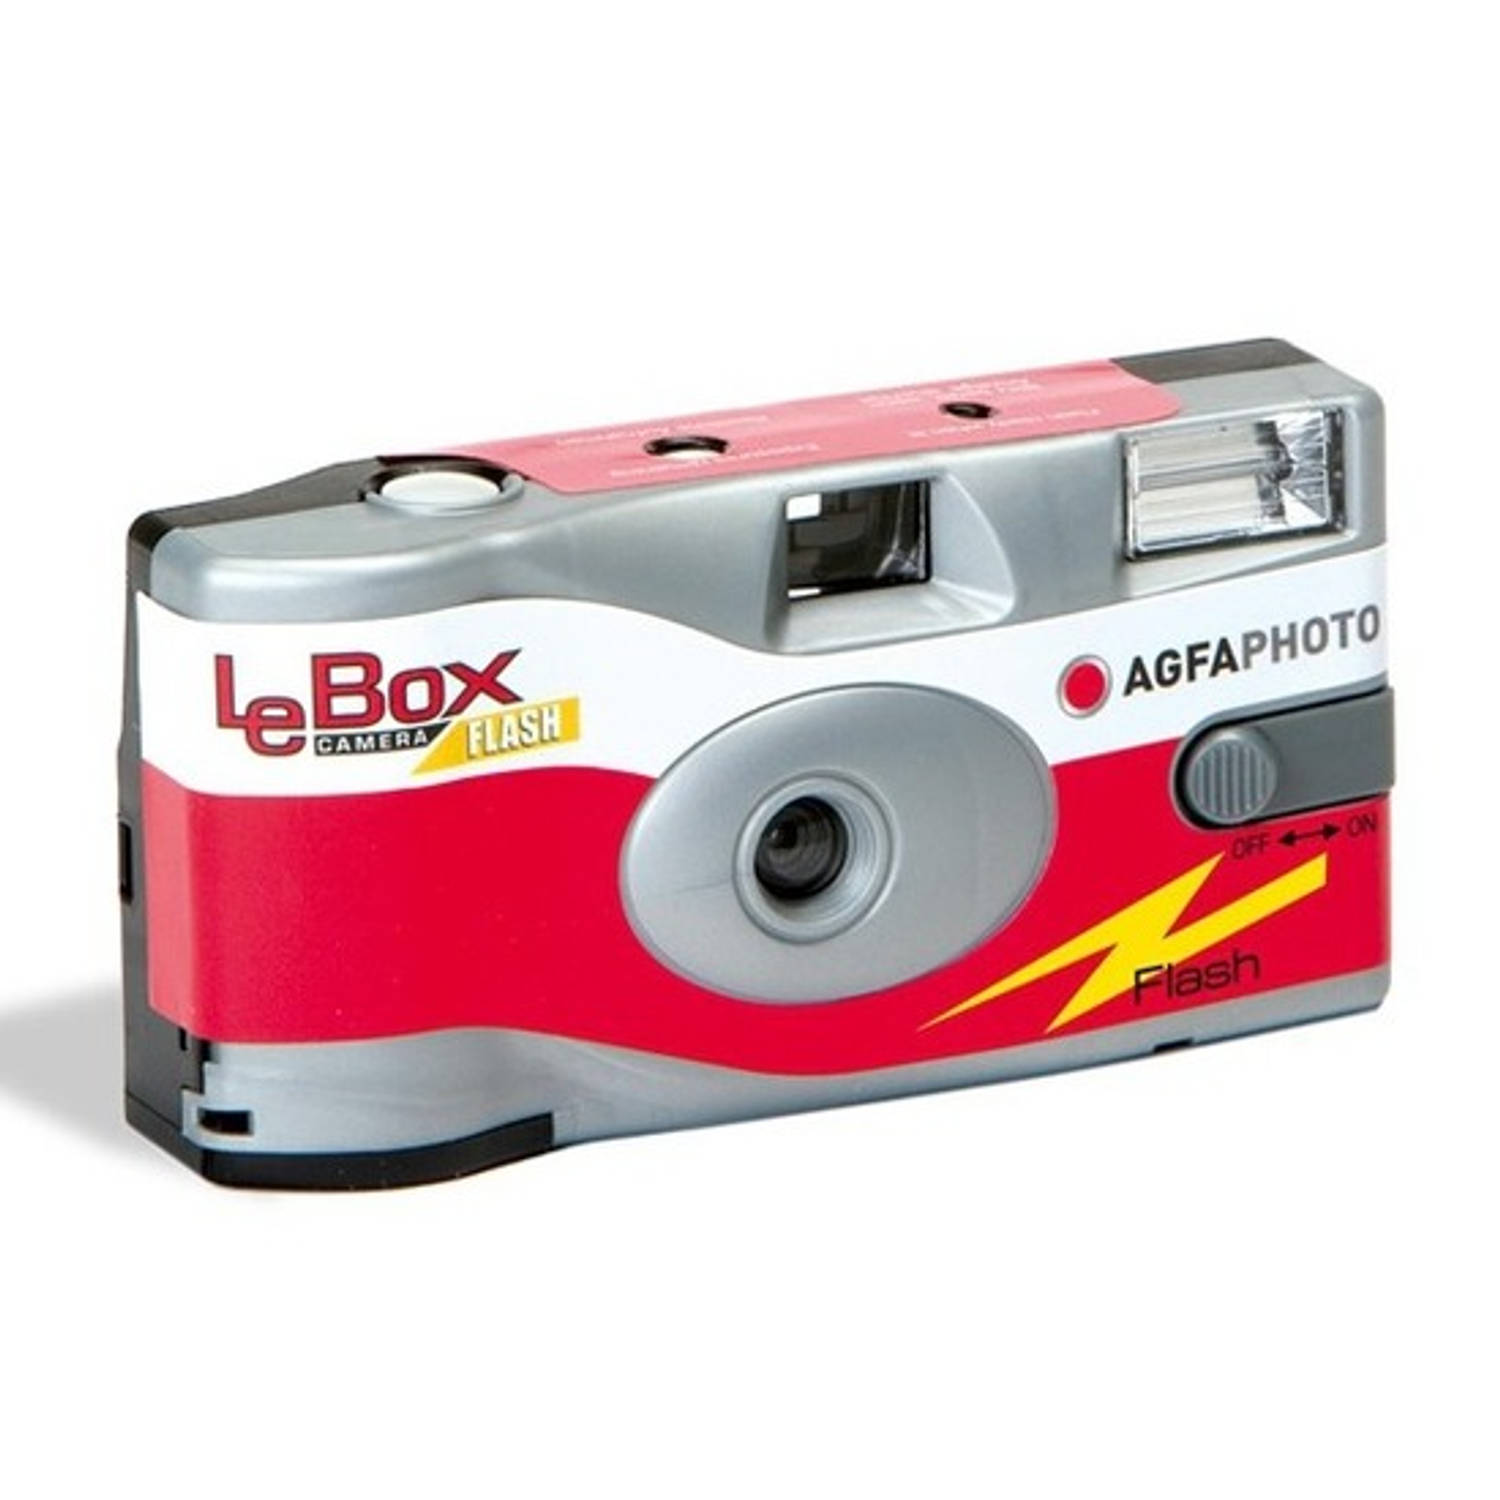 AgfaPhoto LeBox Flash Eenmalig 400 ASA 27 opn. met flits 3 pak